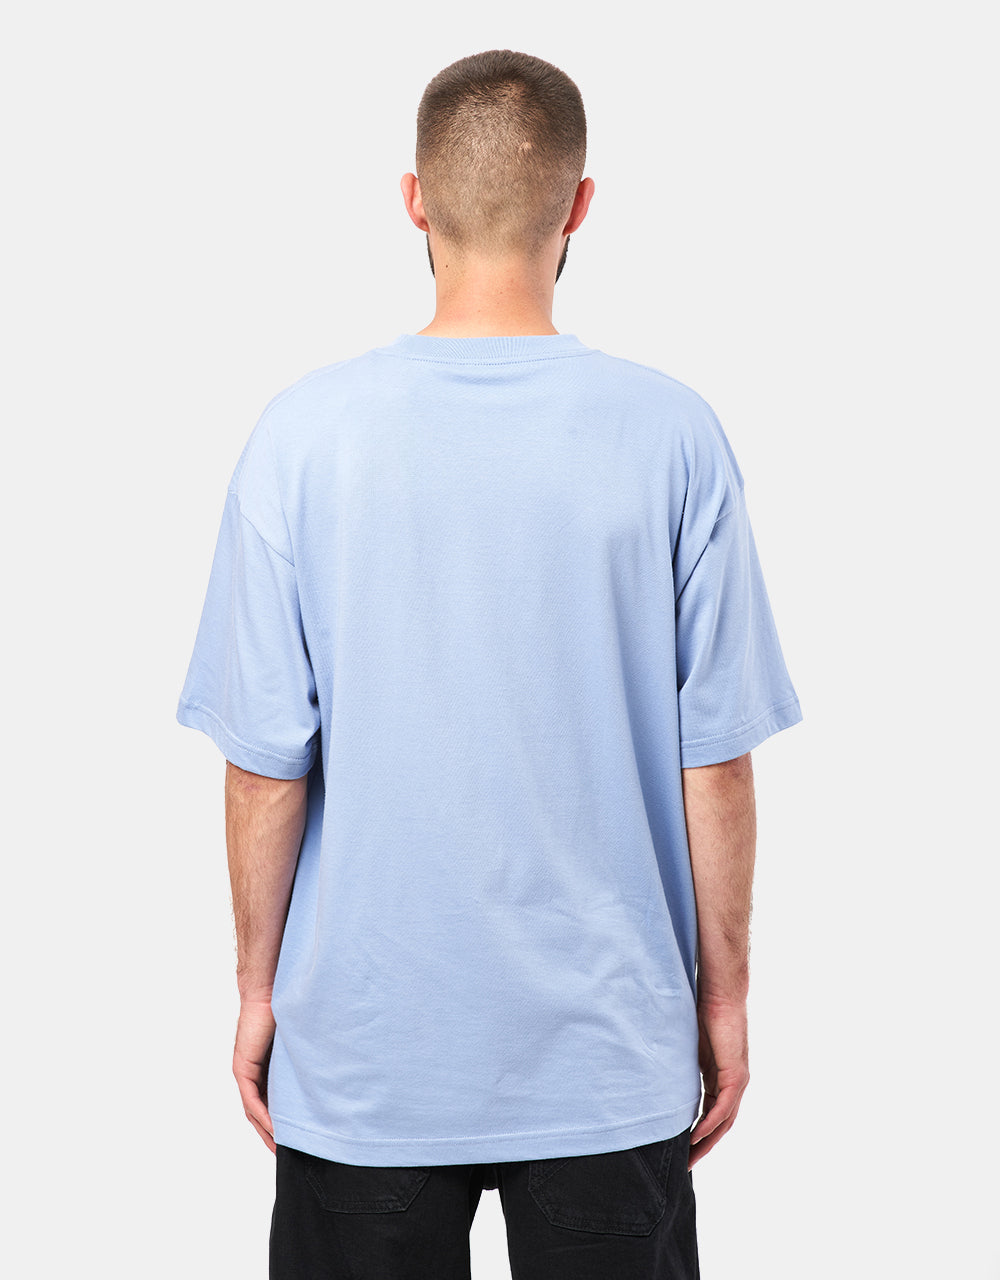 Carhartt WIP S/S Clam T-Shirt - Charm Blue